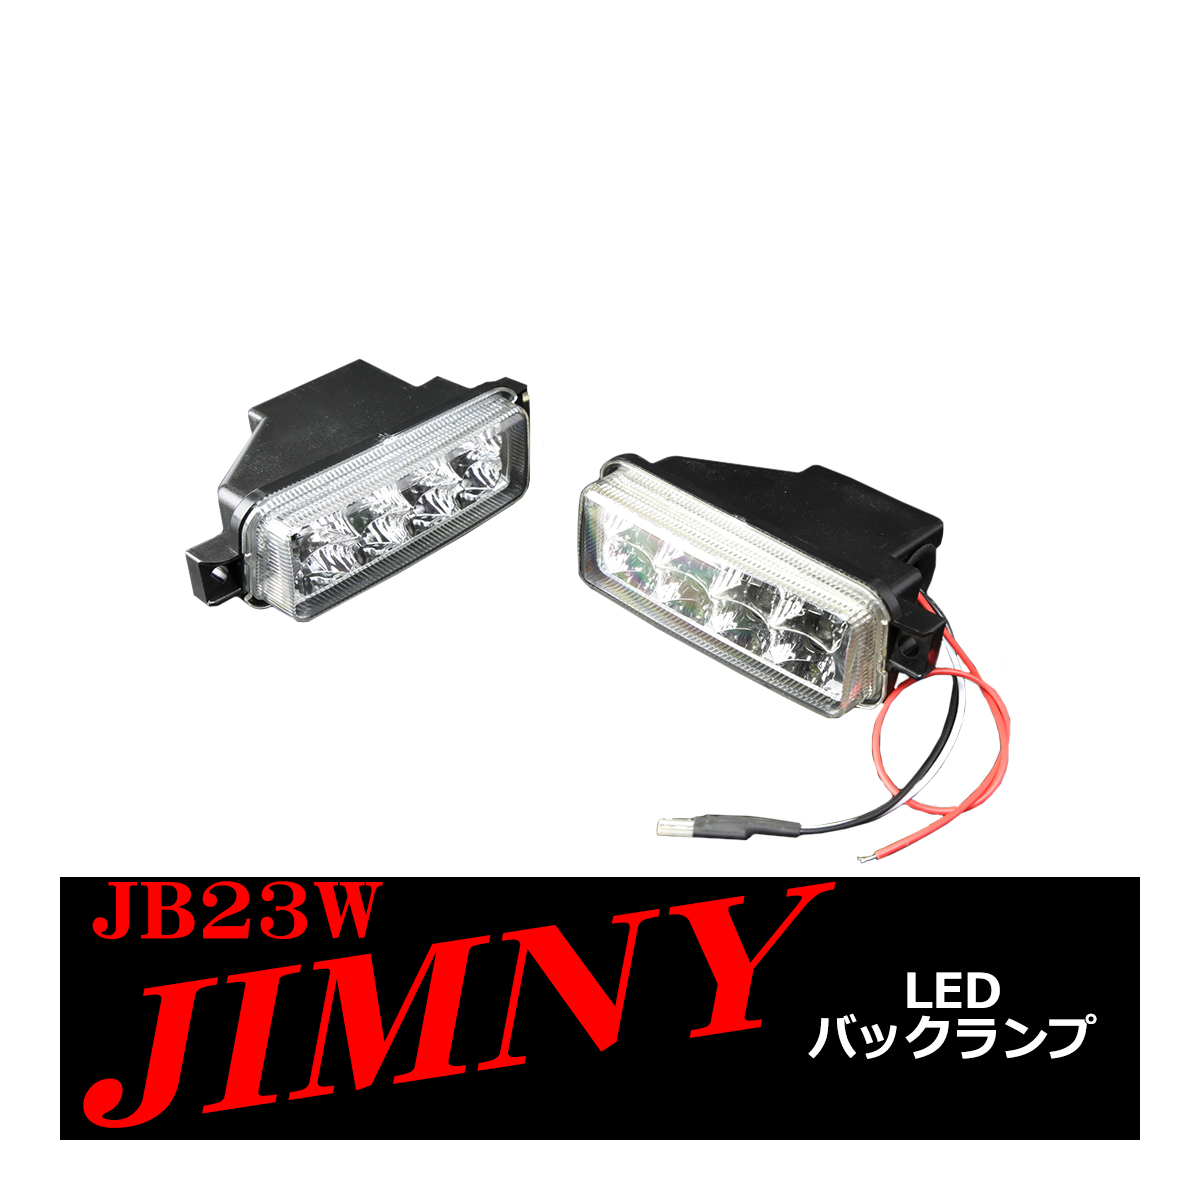 JB23W ジムニー LED バックランプ ユニット ブレーキ連動型 車種別専用